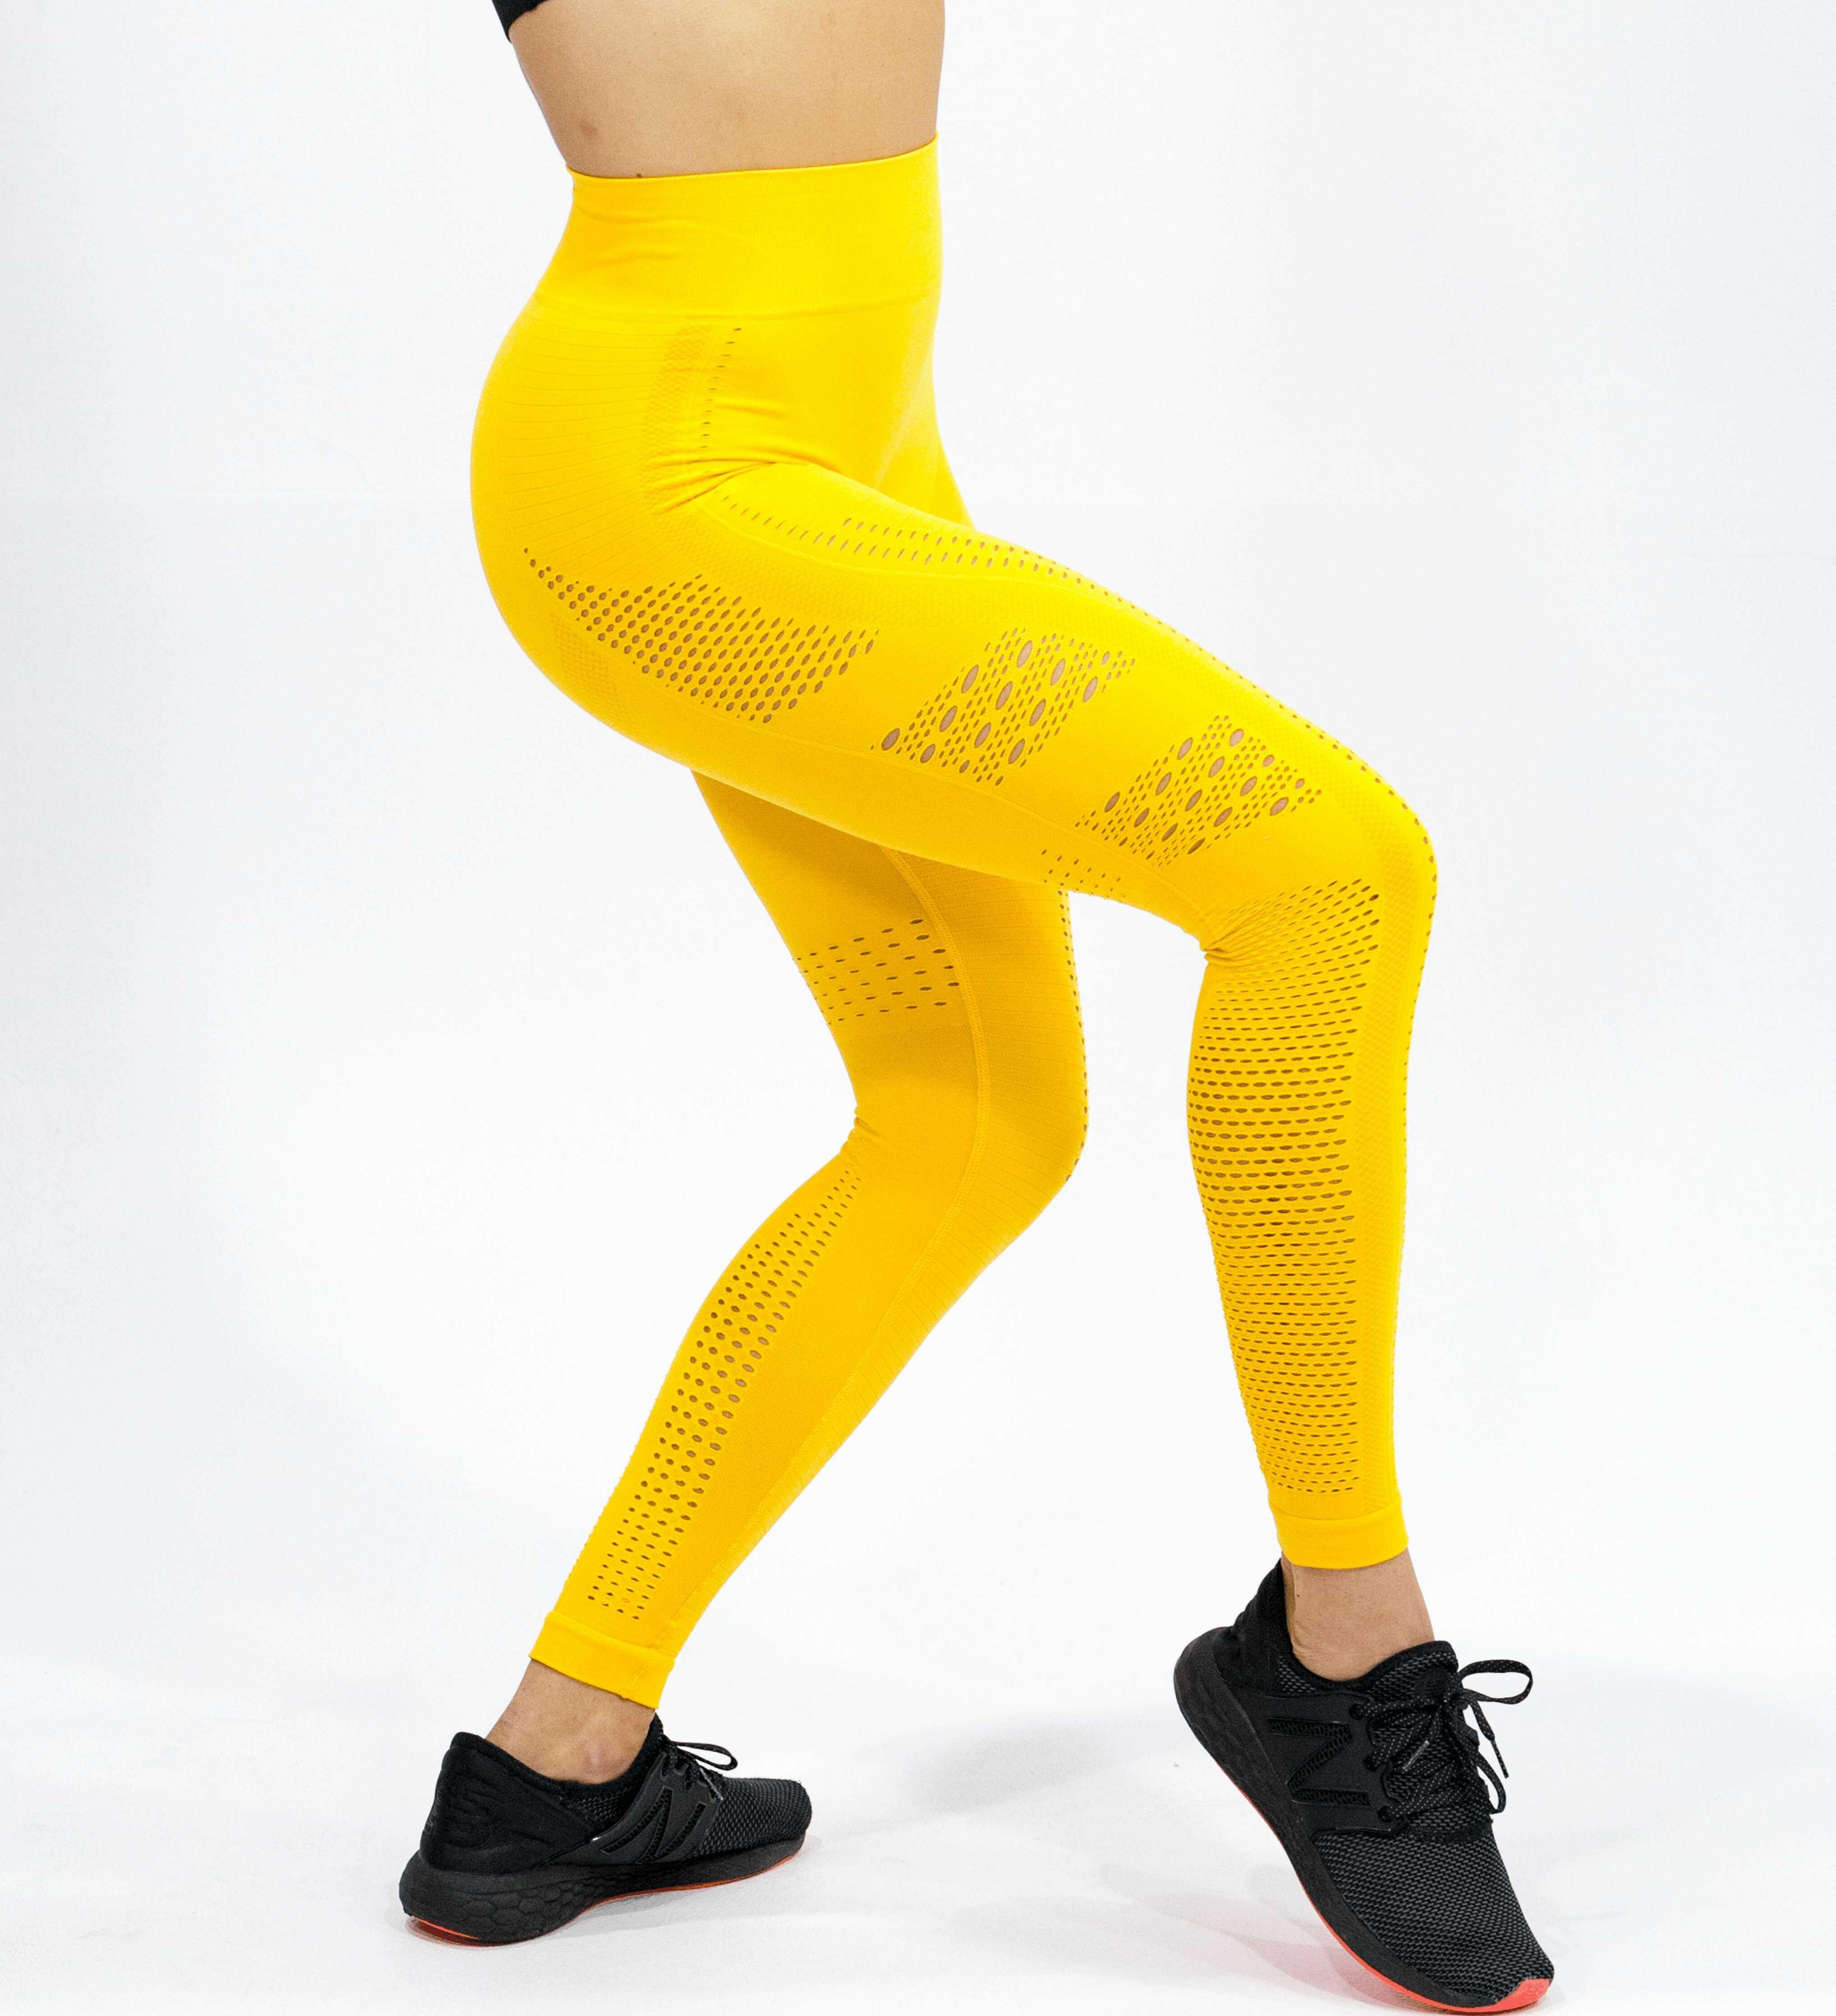 Seamless Air Leggings Yellow - Neo Noir Activewear